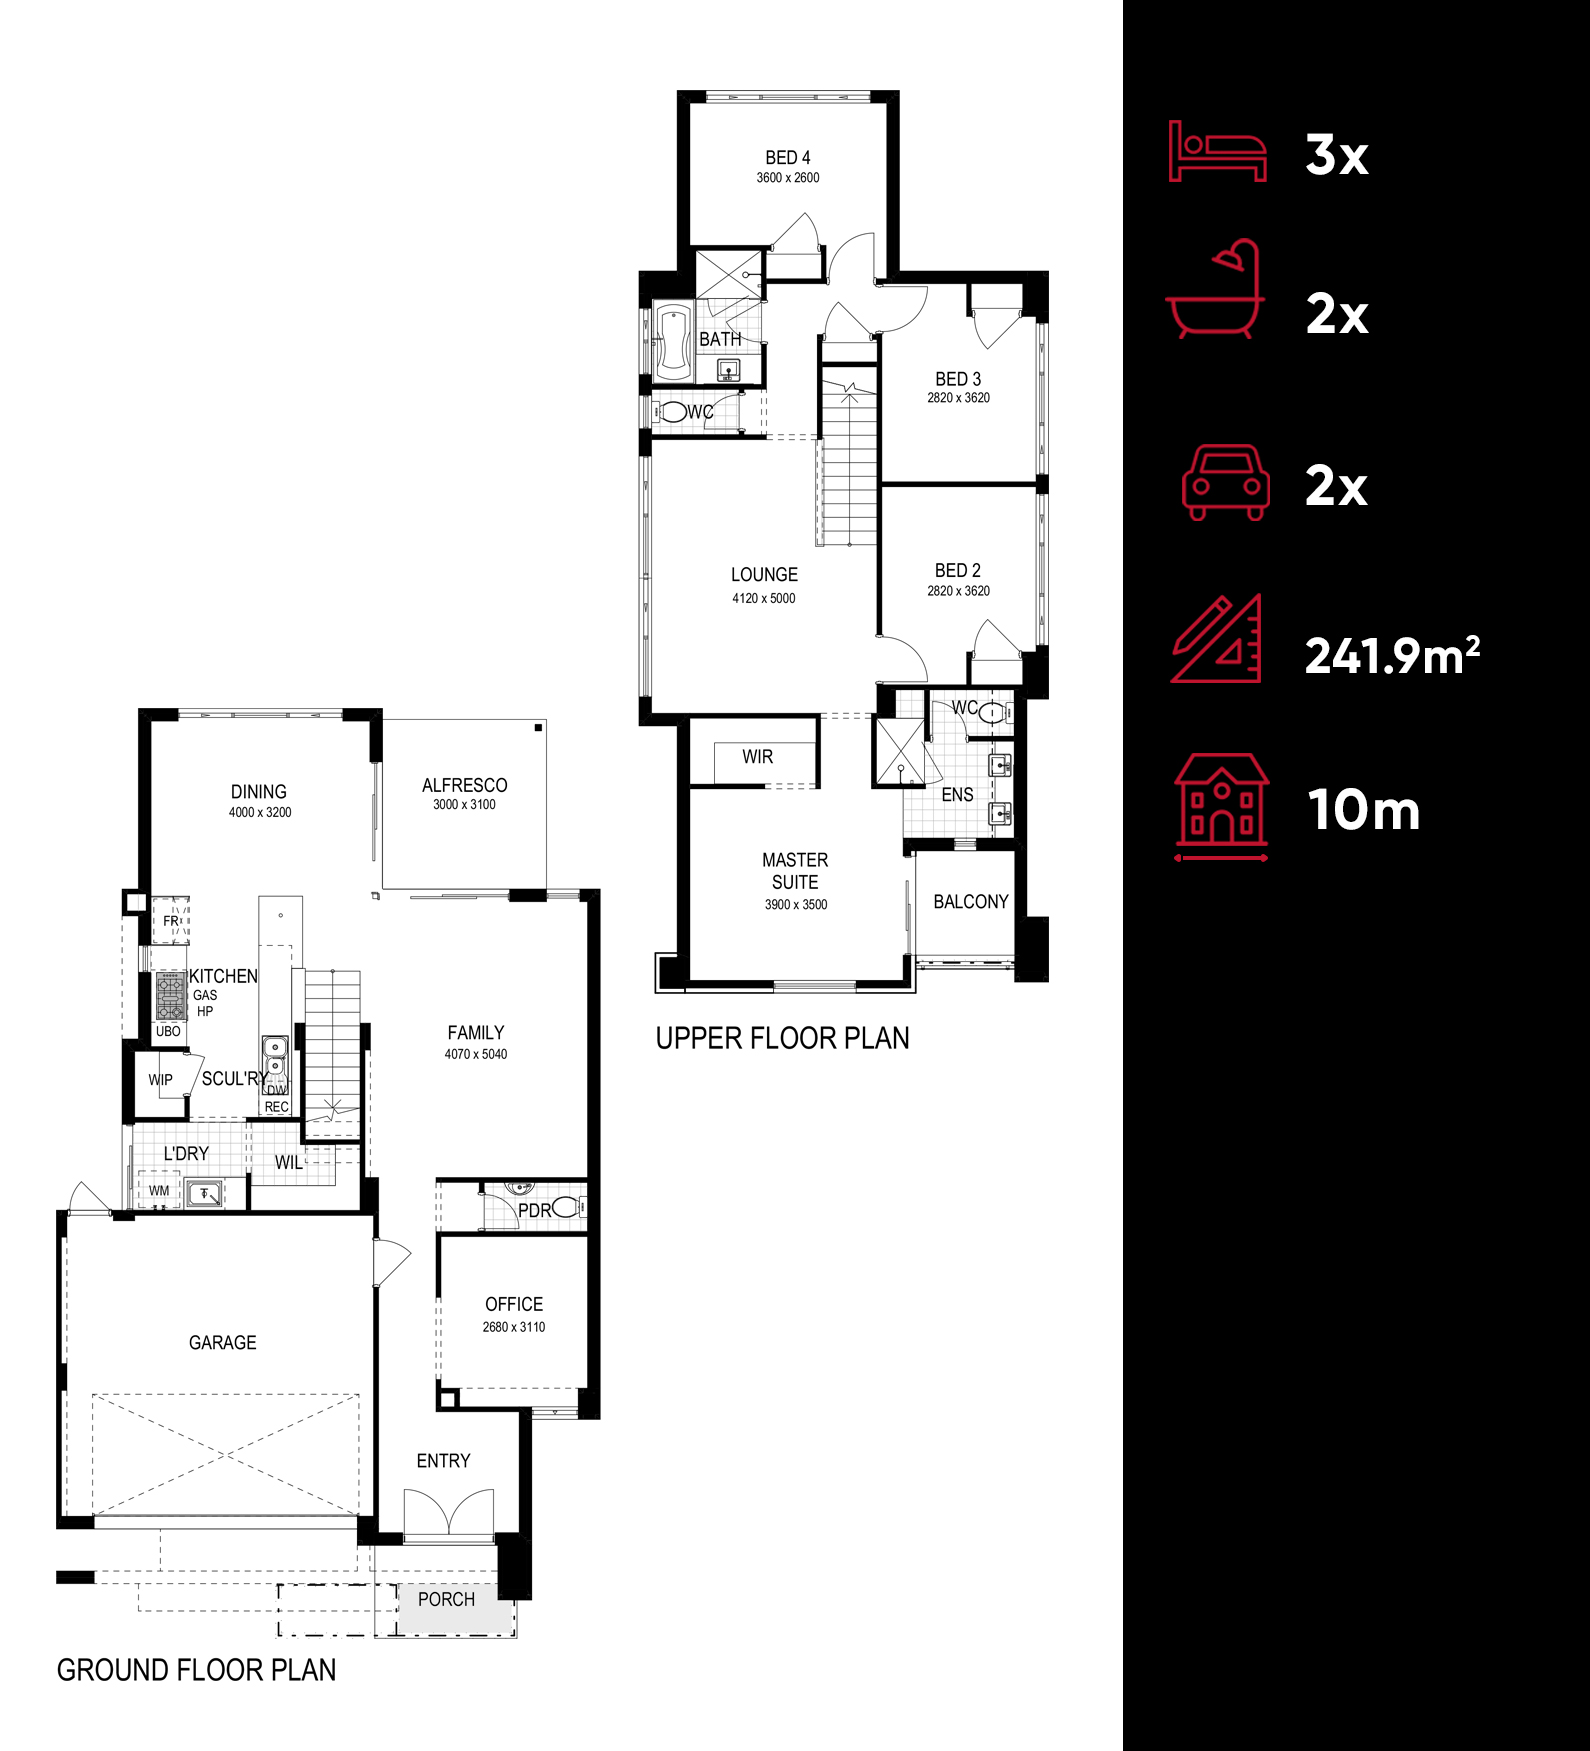 Full house floorplan